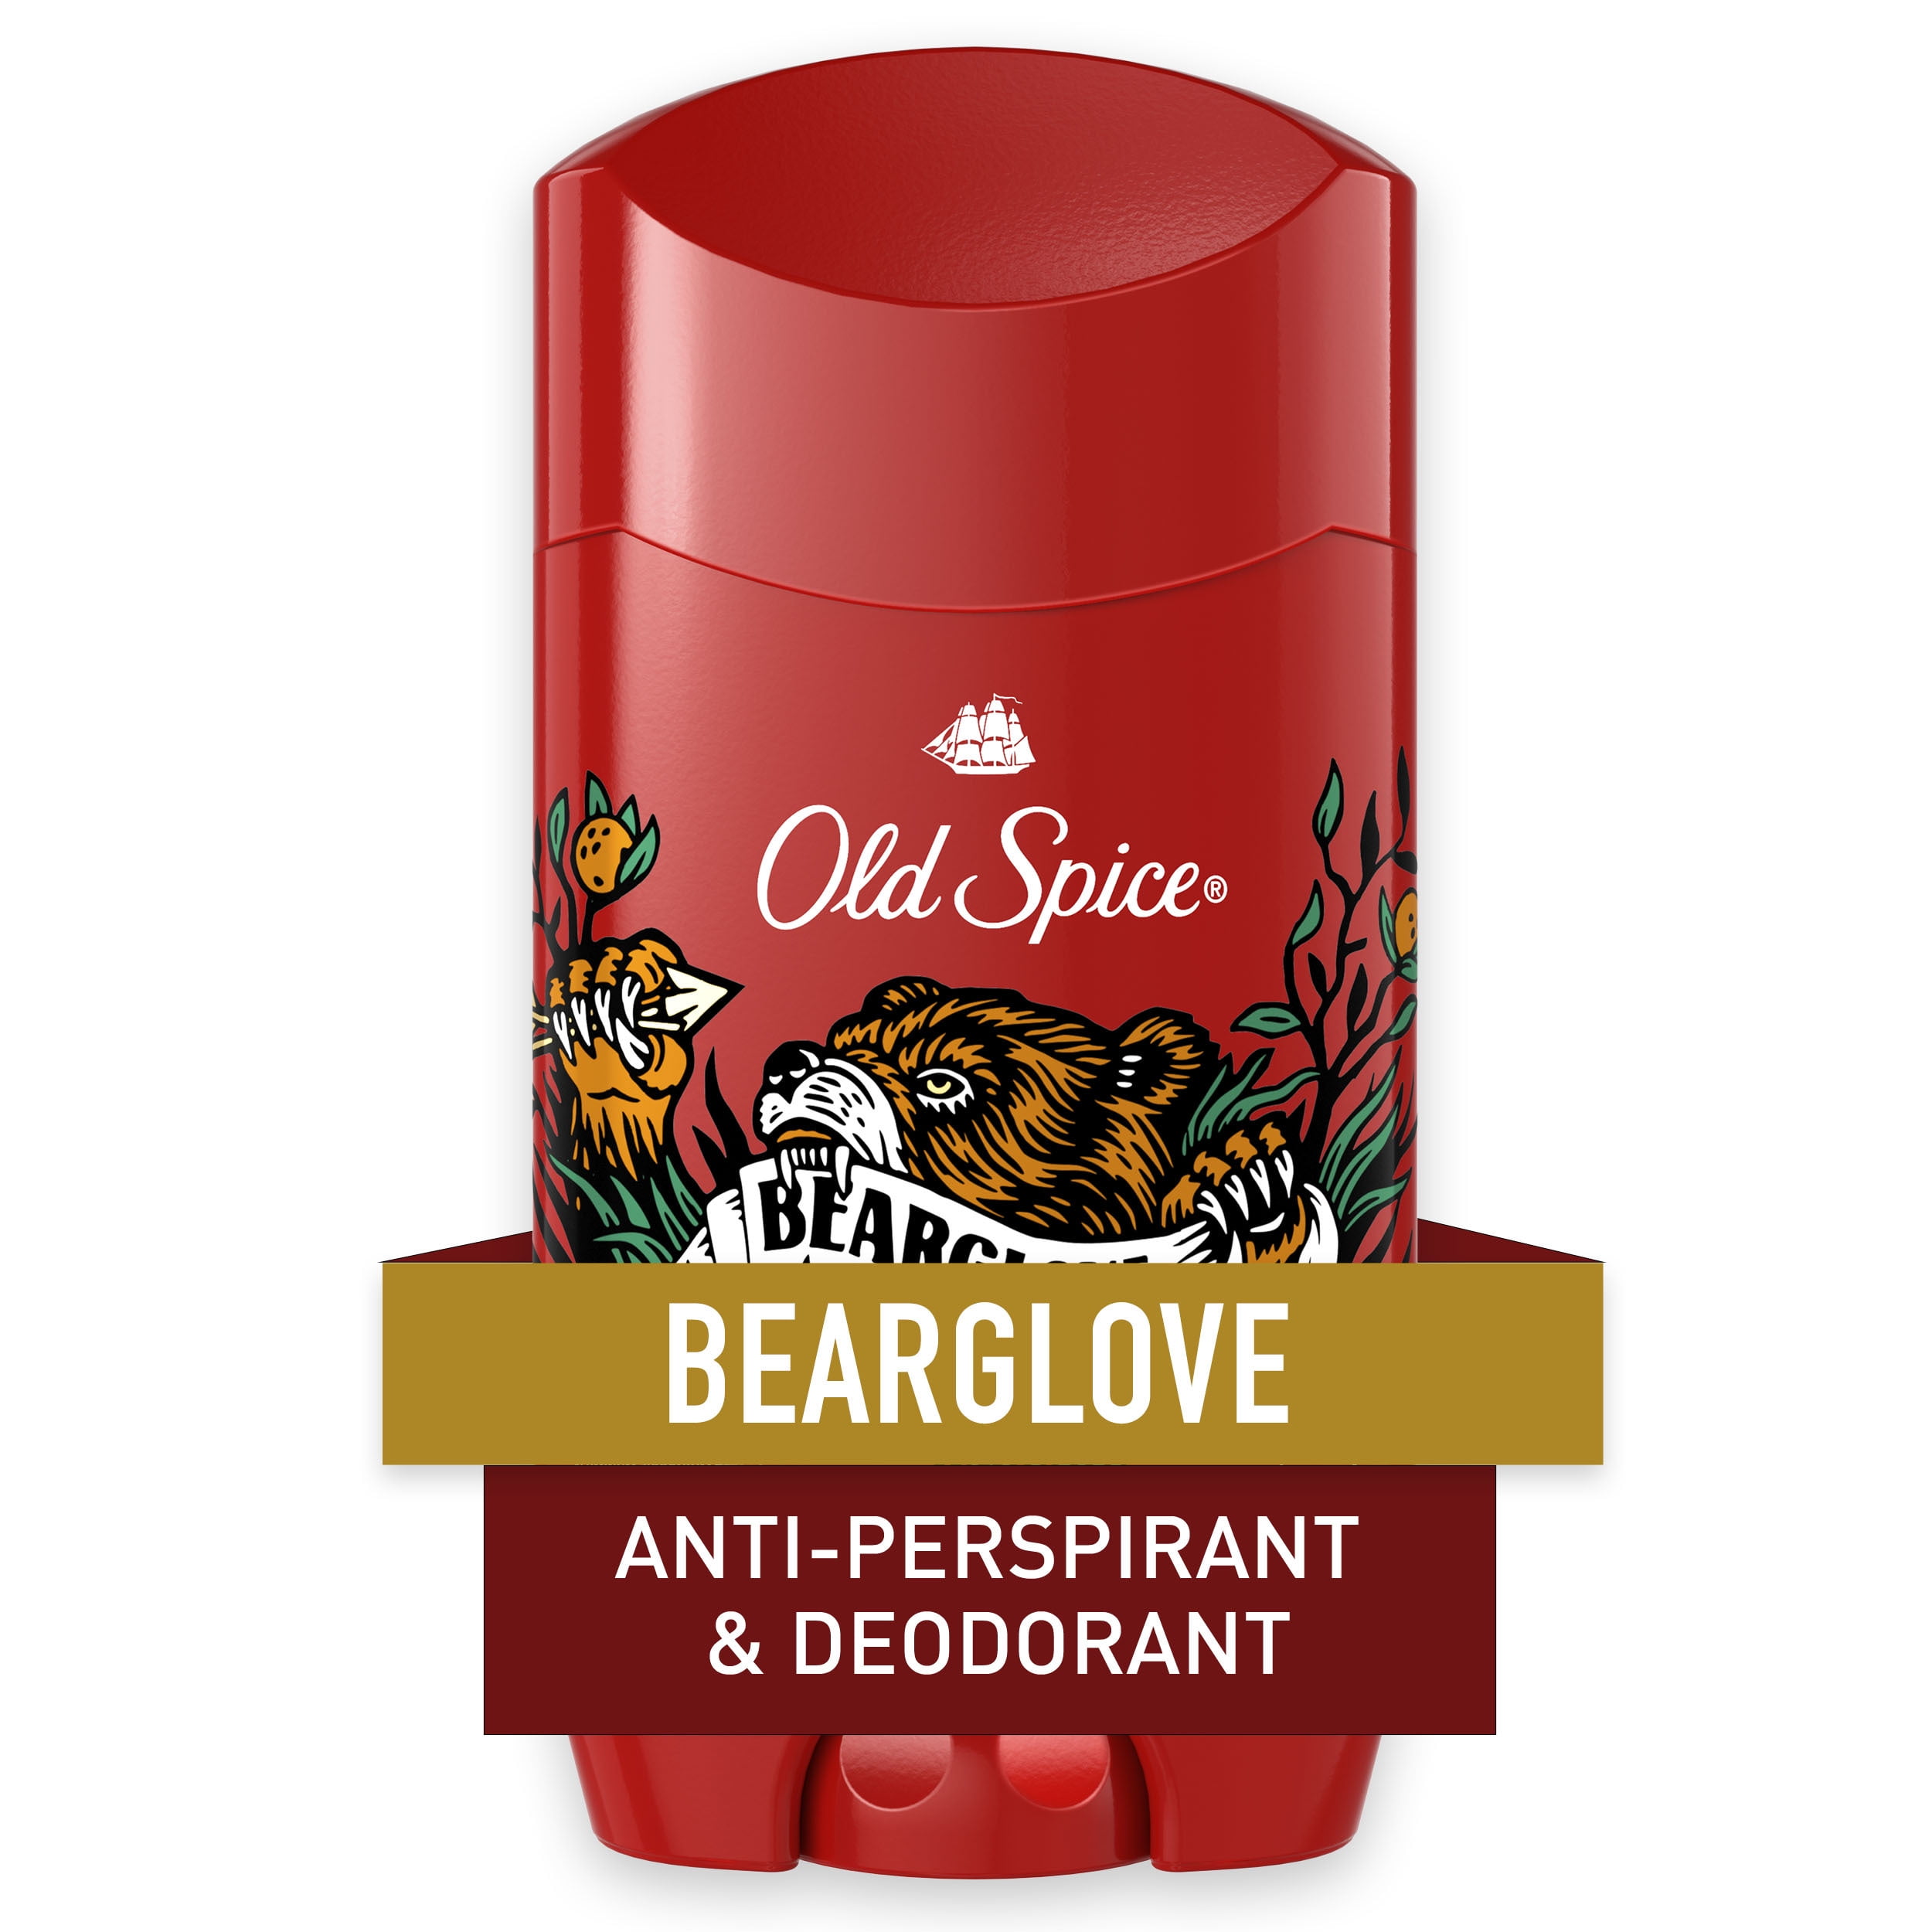 Old Spice Anti-Perspirant & Deodorant, Bearglove - 2.6 oz